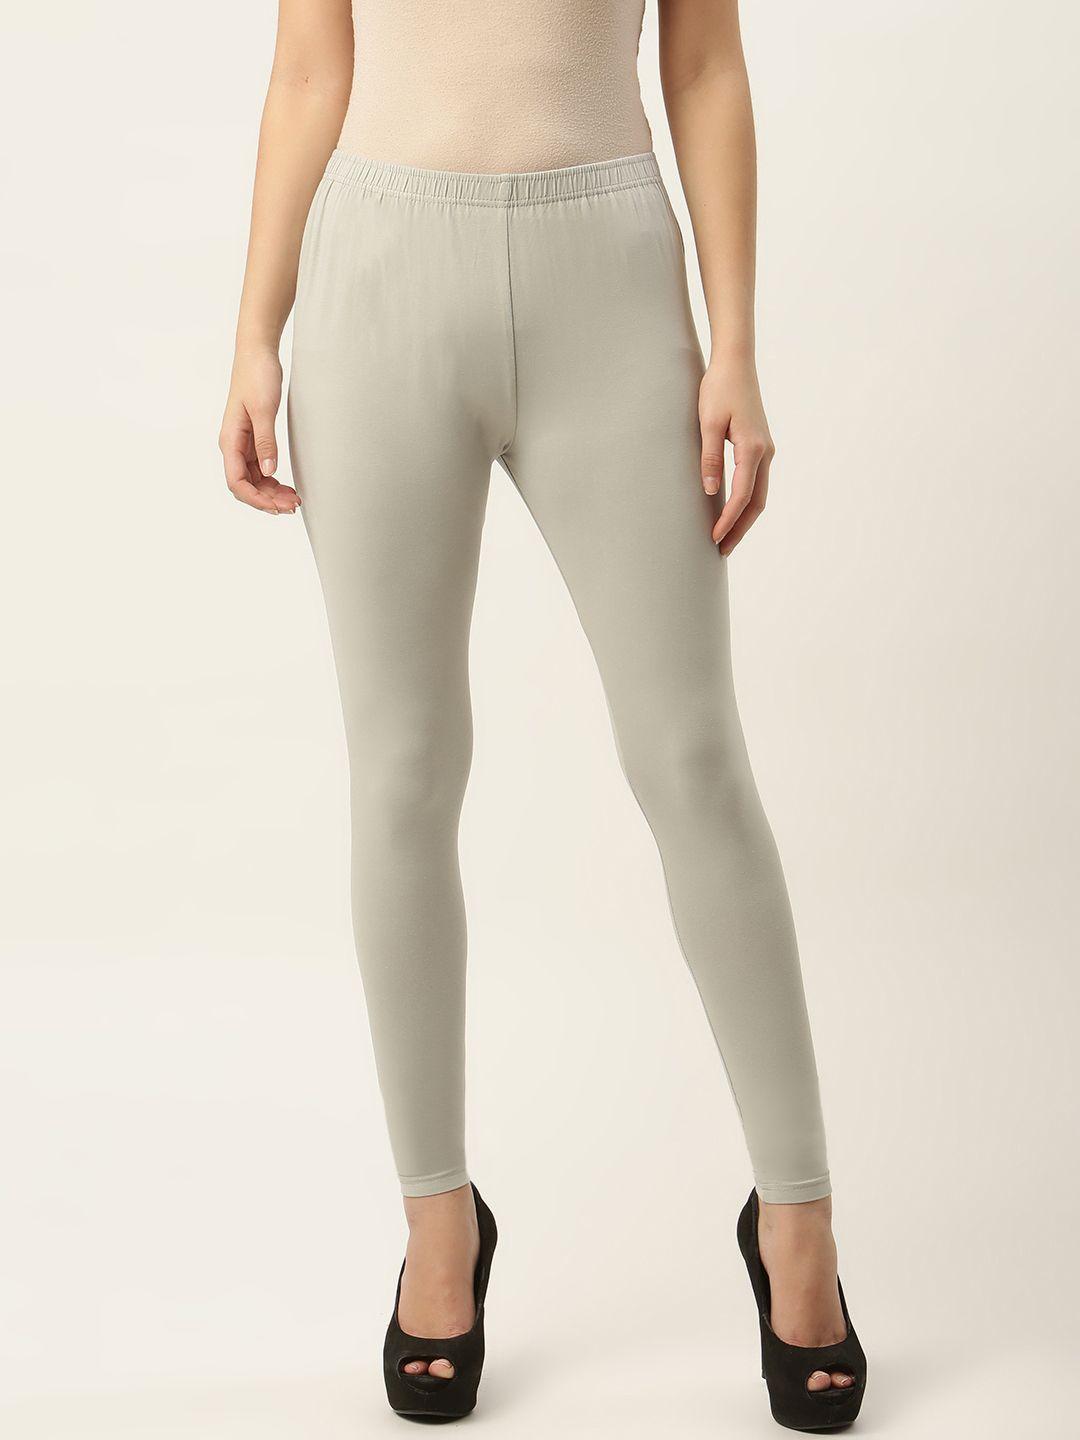 ms.lingies women grey solid ankle-length leggings